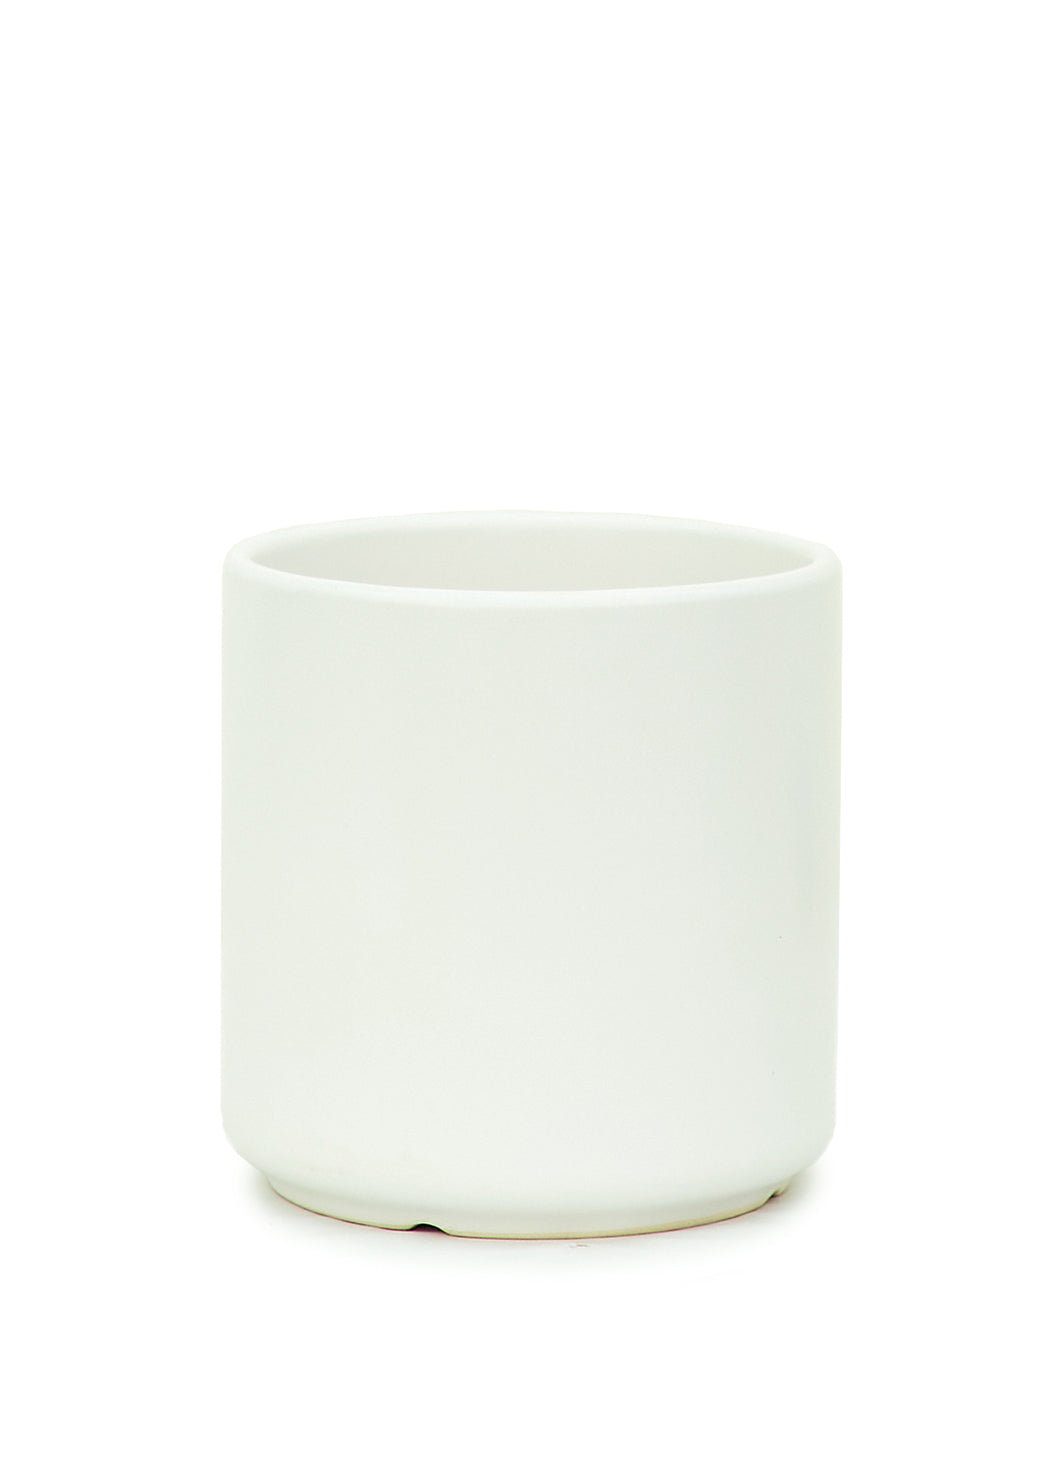 Cylindrical Ceramic Planter, White 5